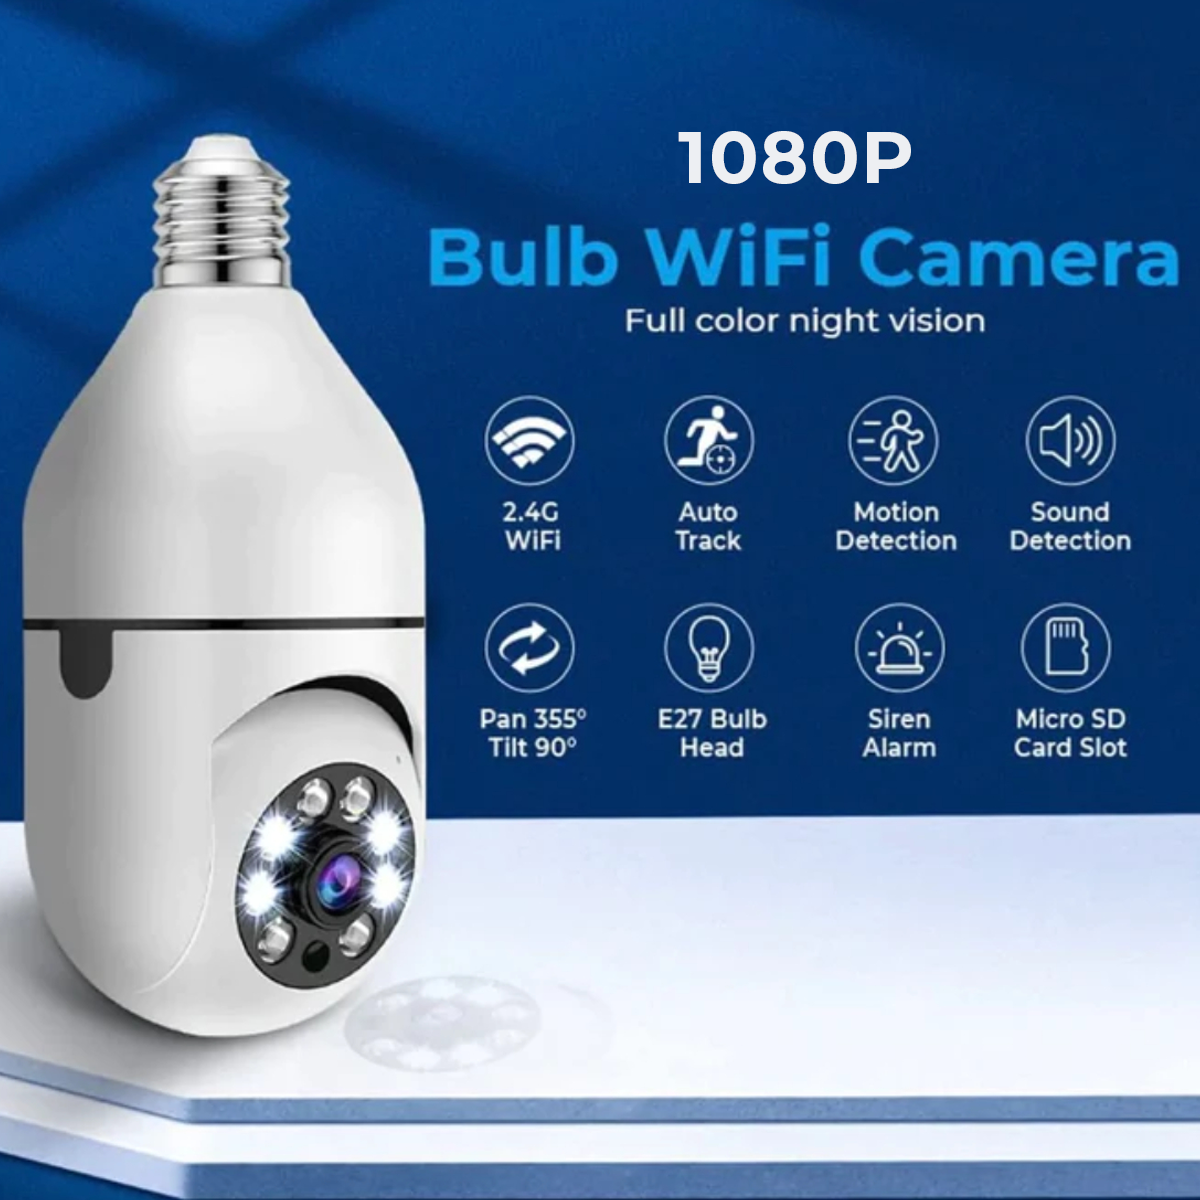 360° WiFi 1080p Bulb Camera